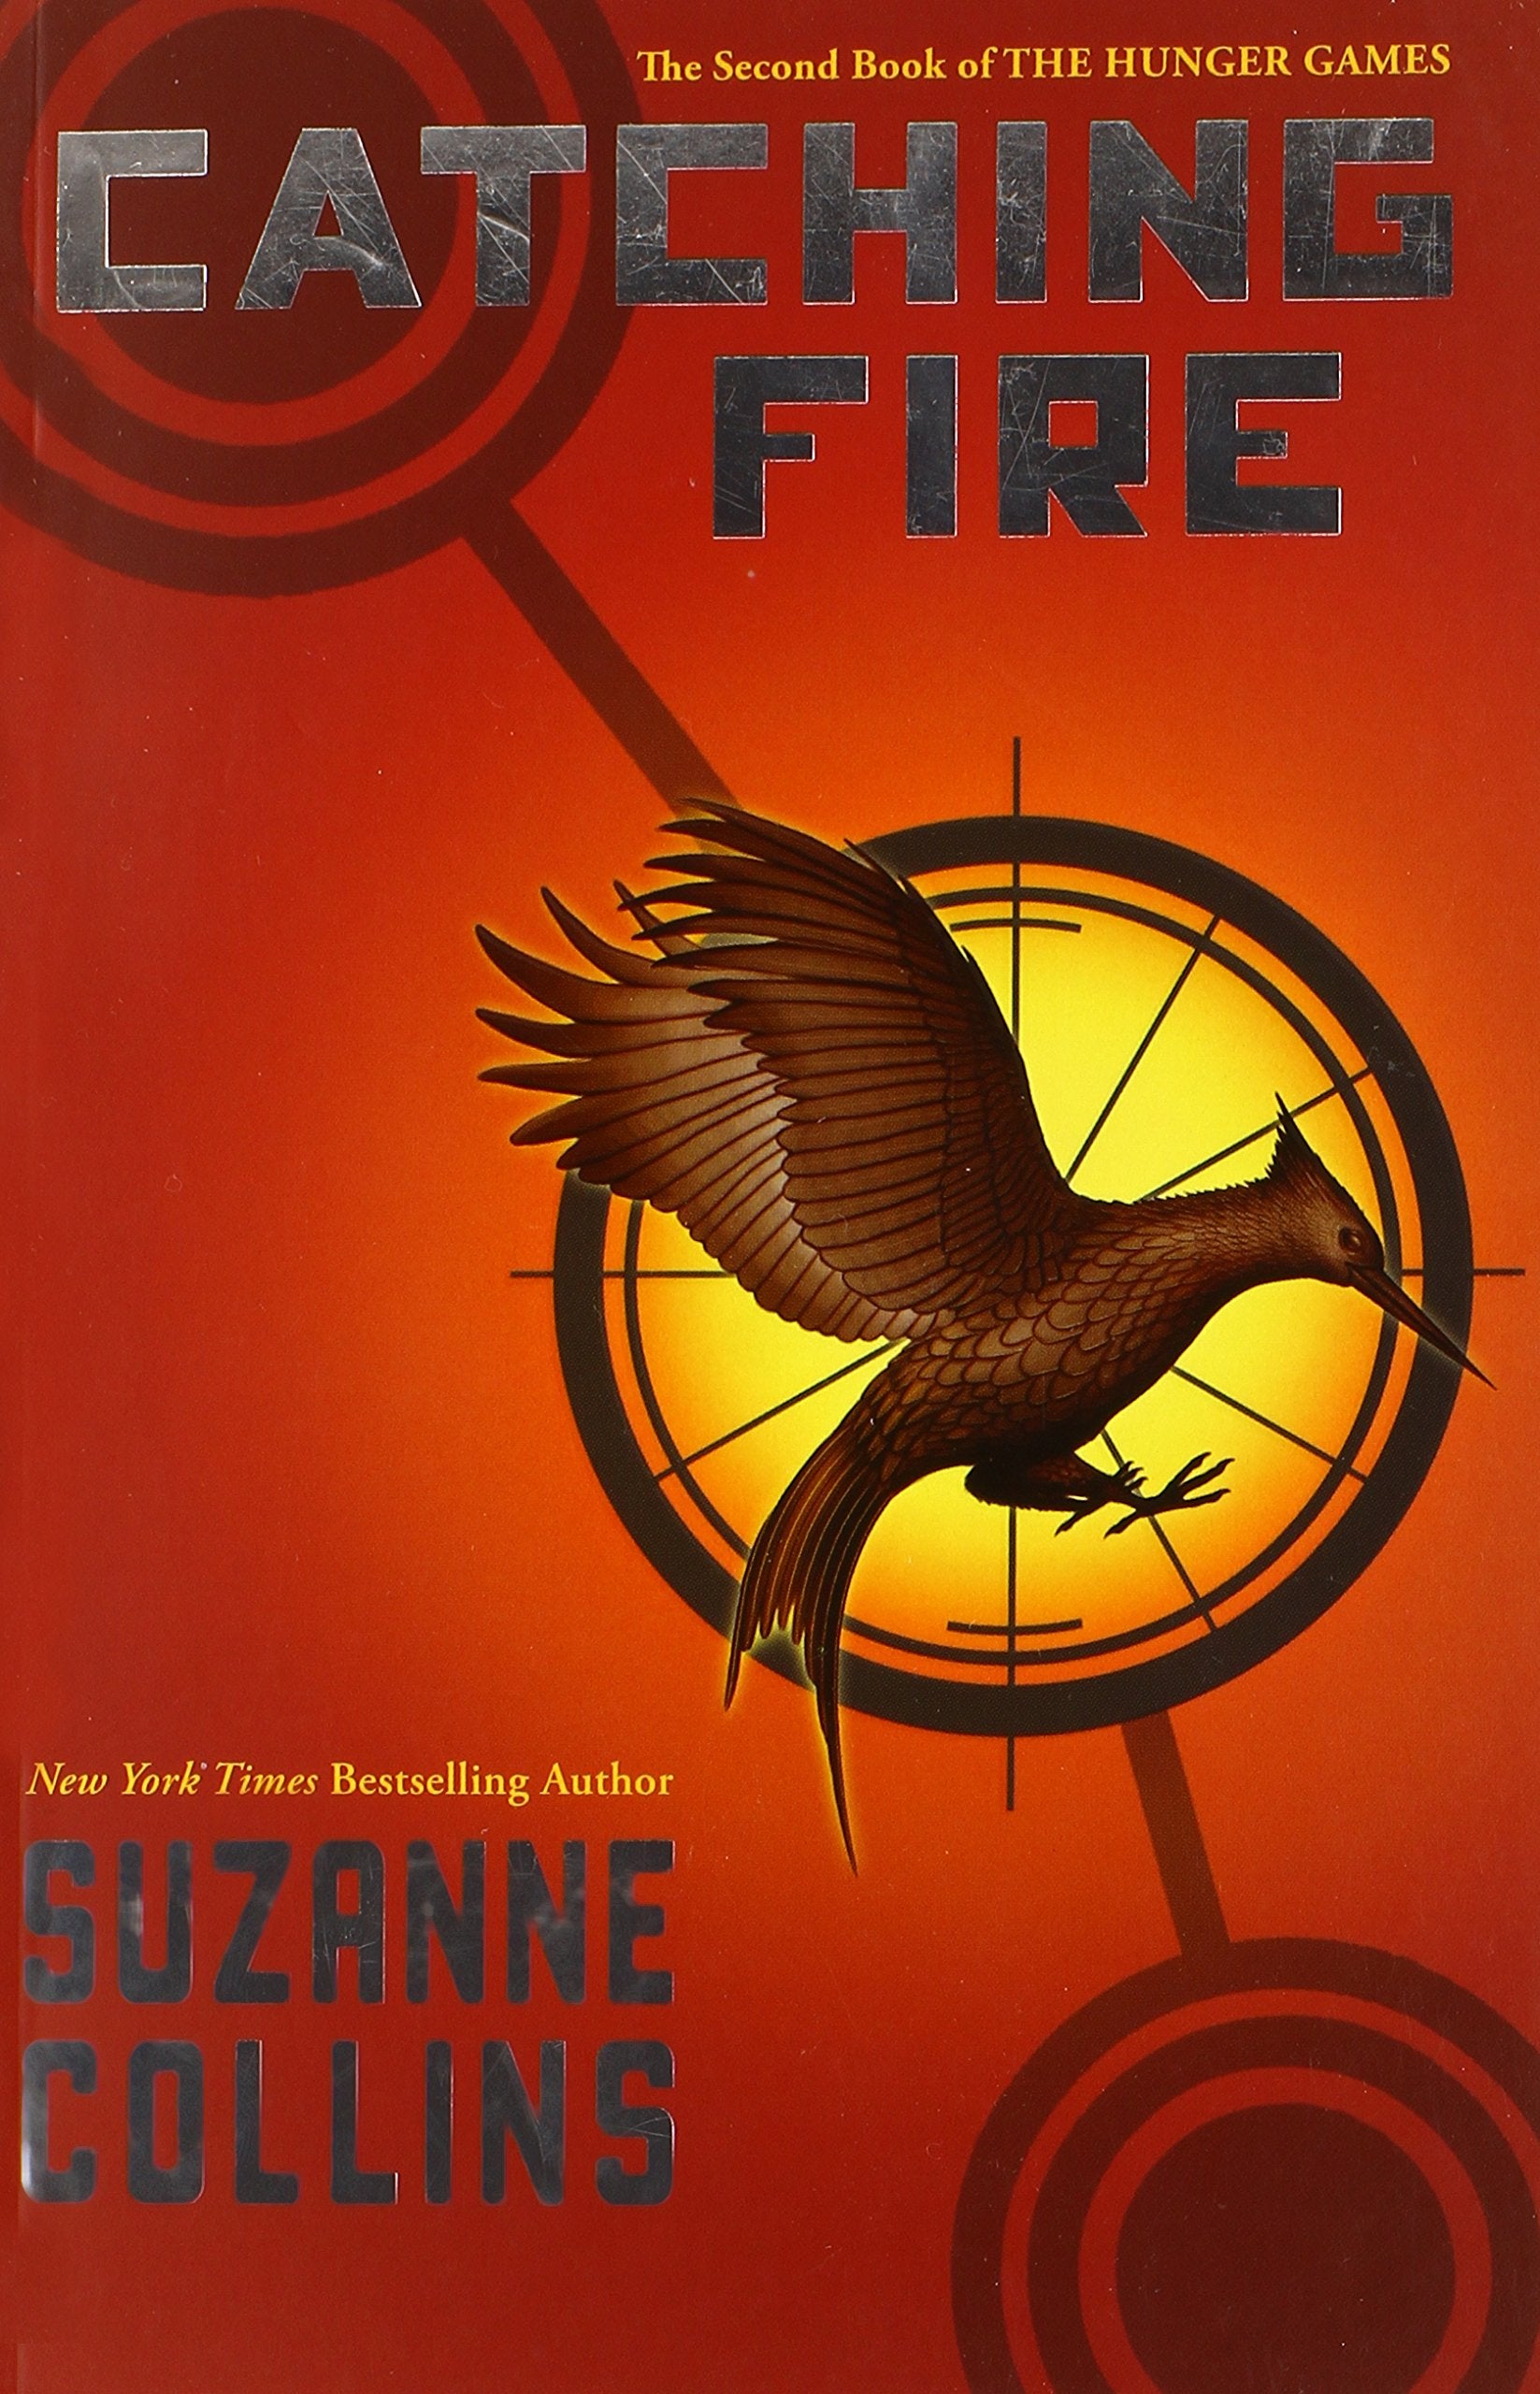 The Hunger Games Books — Books2Door